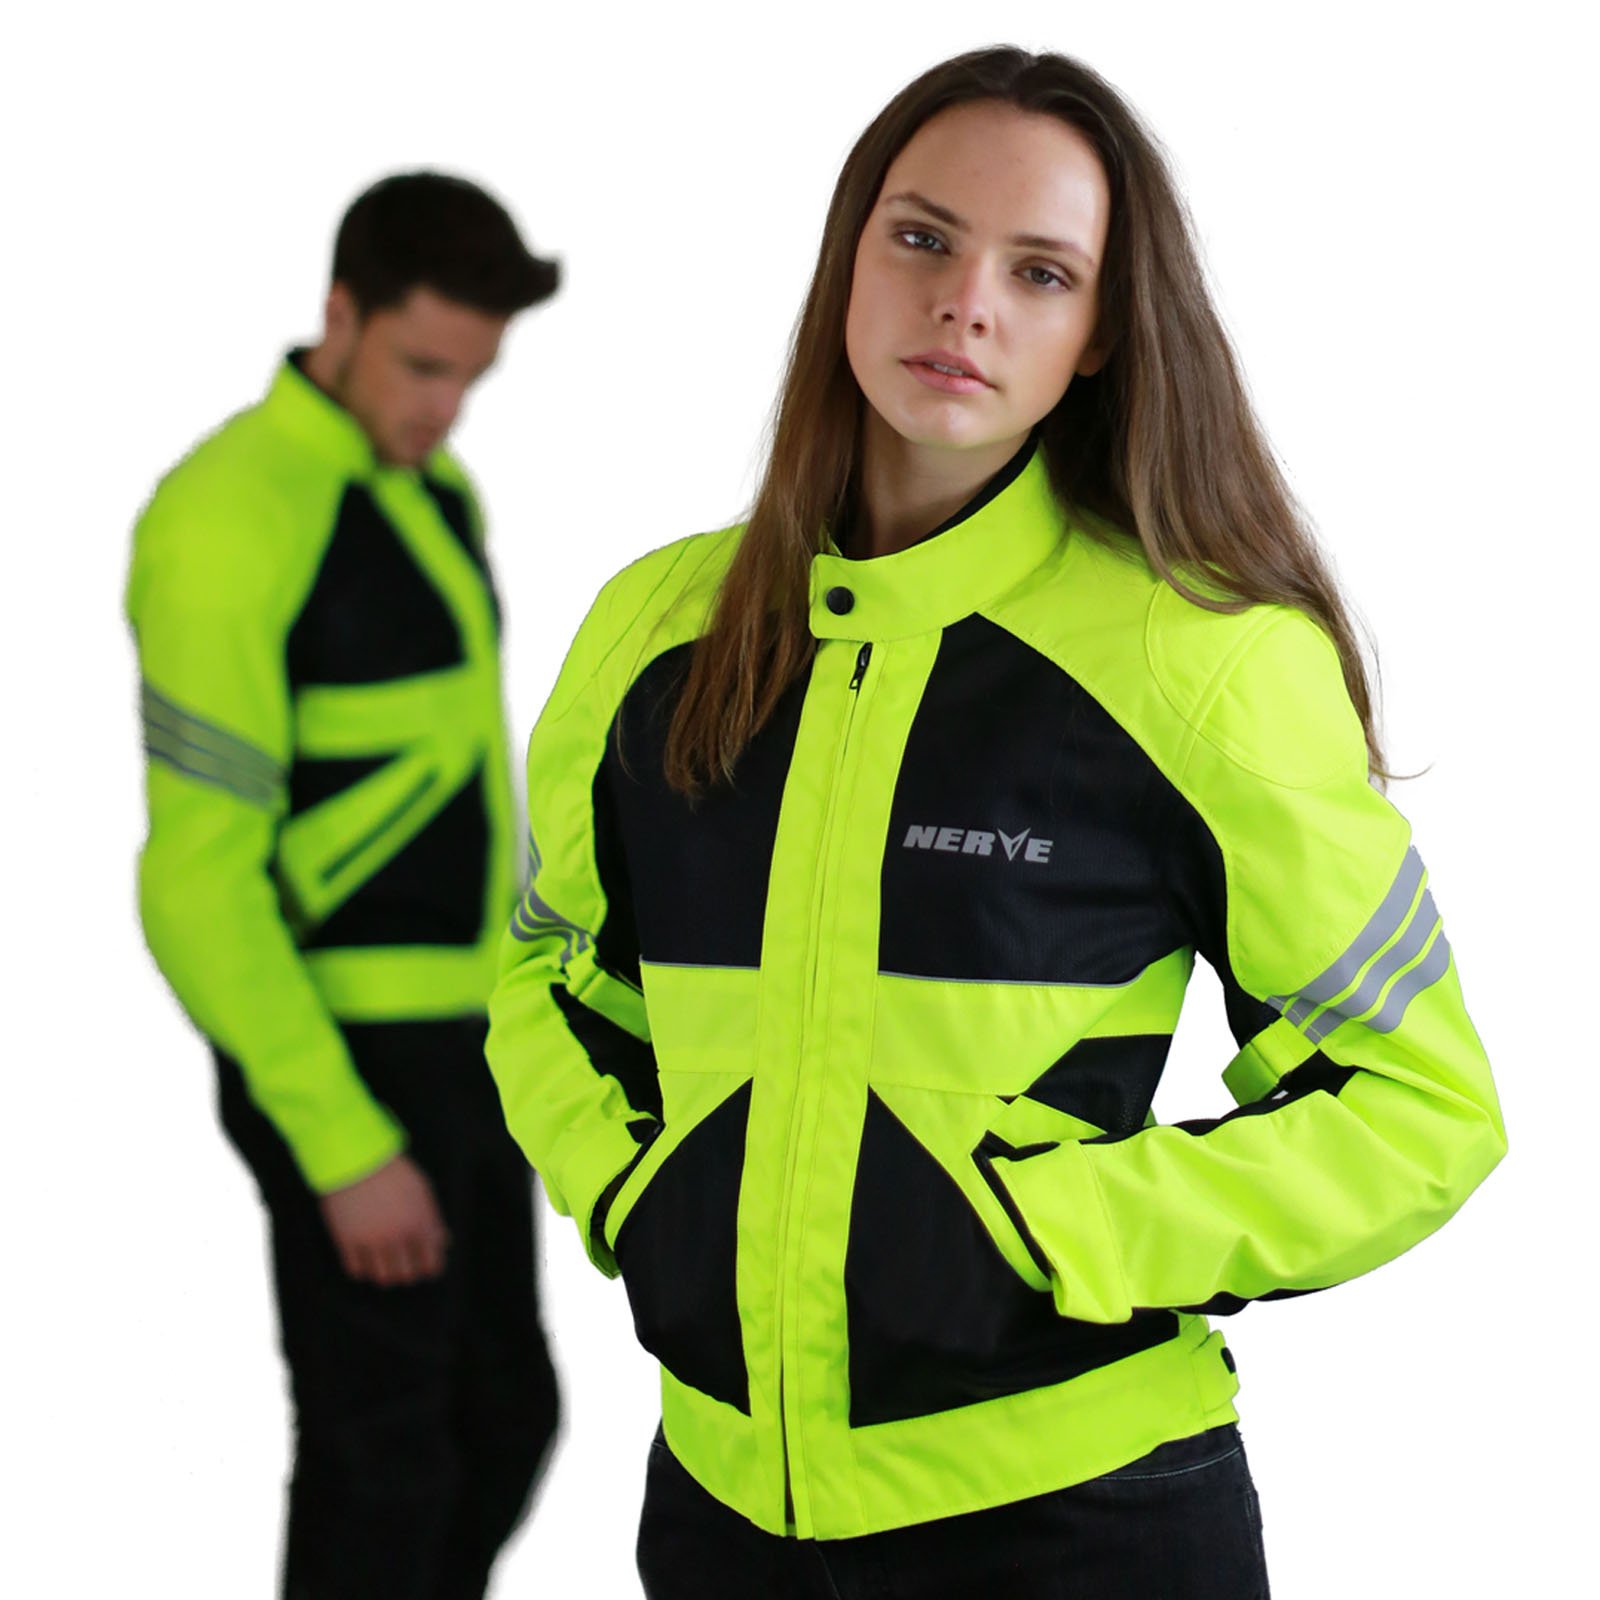 Nerve Shop Dünne Motorradjacke -Go- Motorrad Sommerjacke Protektorenjacke Damen Sommer Jacke Kurz Elegant Leicht Textil Mesh - schwarz-neon-grün-gelb - 2XL / XXL